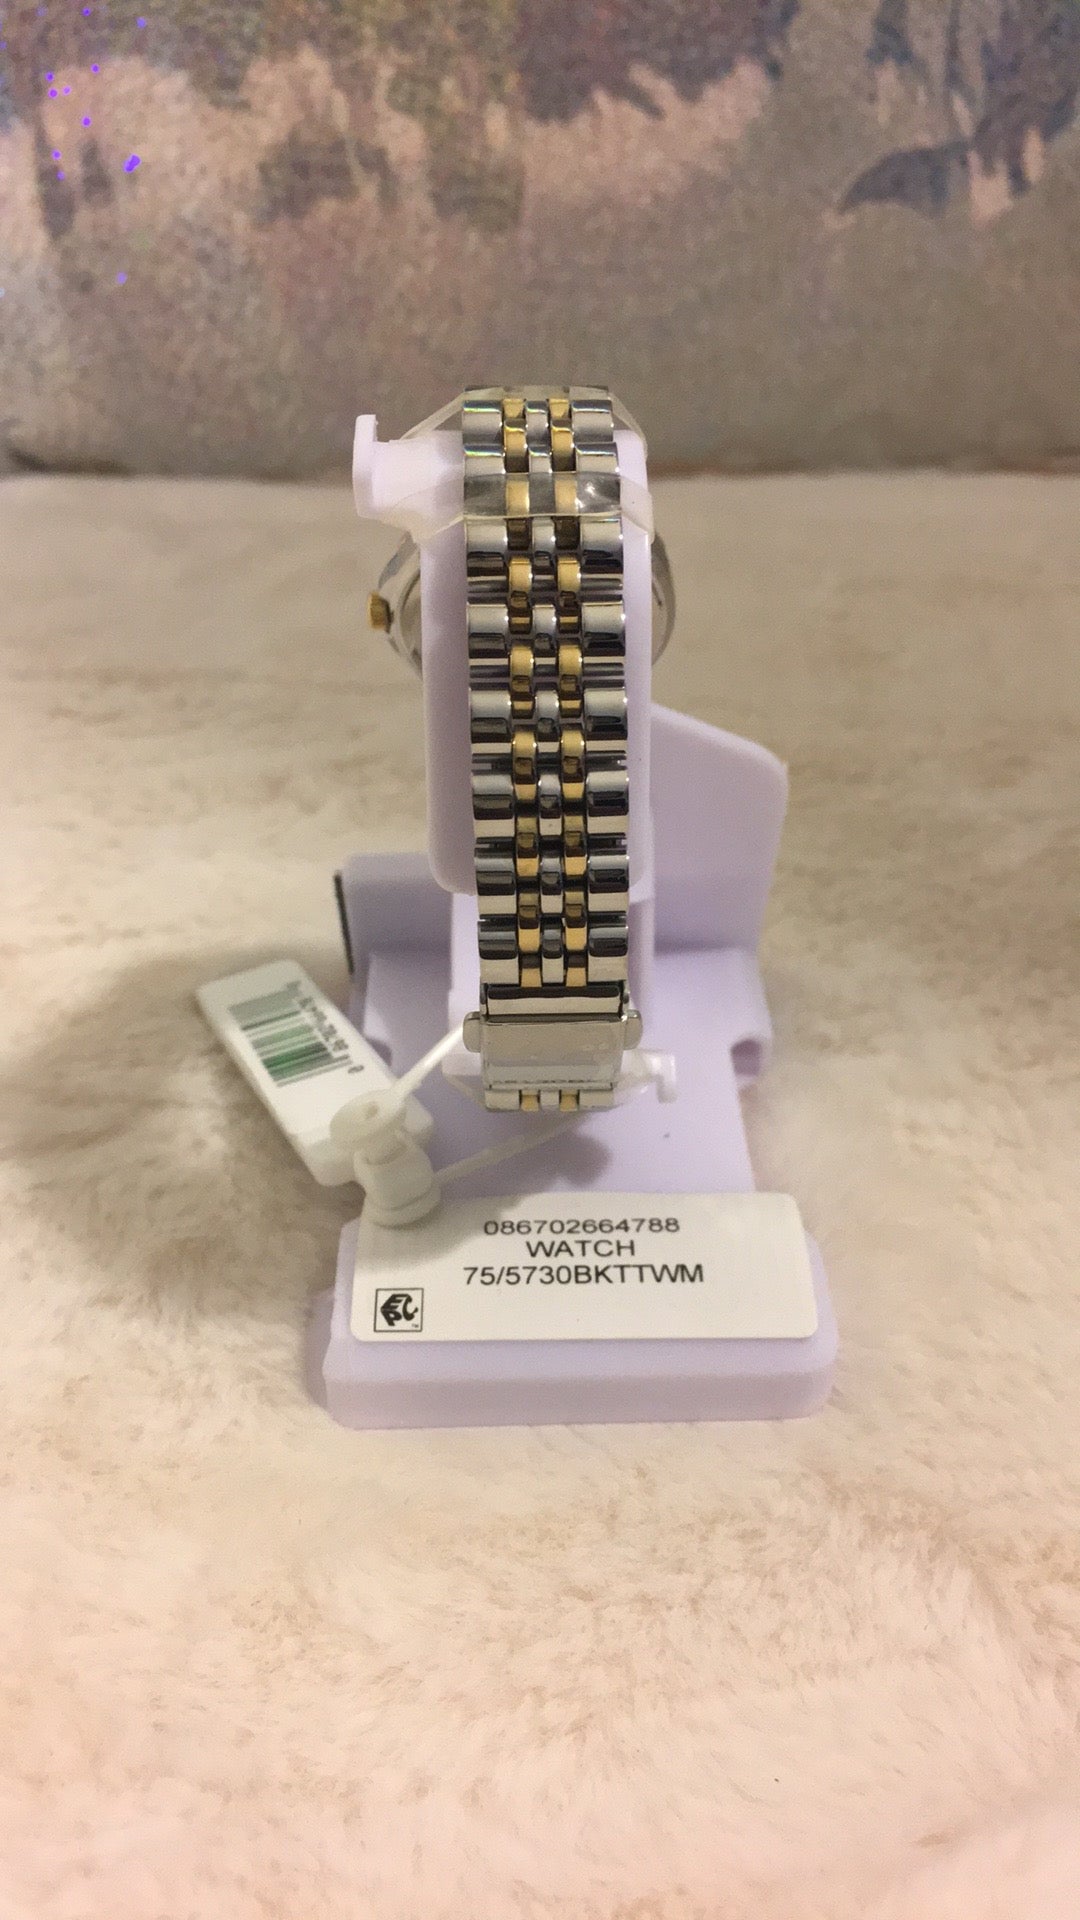 Armitron Self Adjustable Bracelet Watch